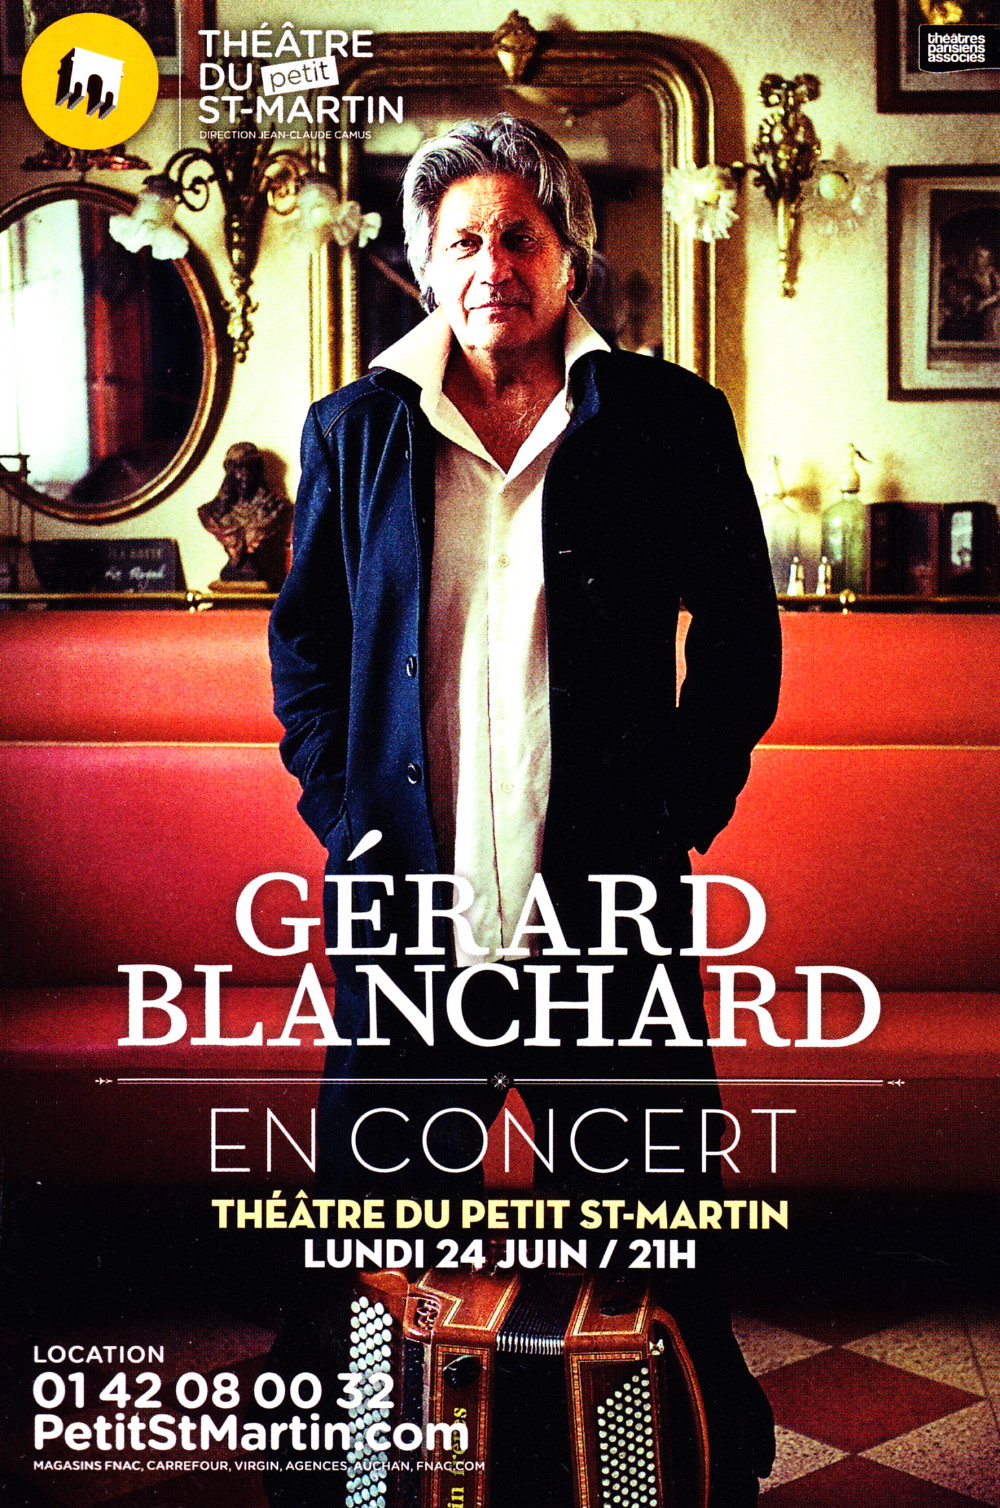  "GÉRARD BLANCHARD, solo dancing" dans "ACCORDÉON & ACCORDÉONISTES" n°133 (septembre 2013) 13082007385315789311481190